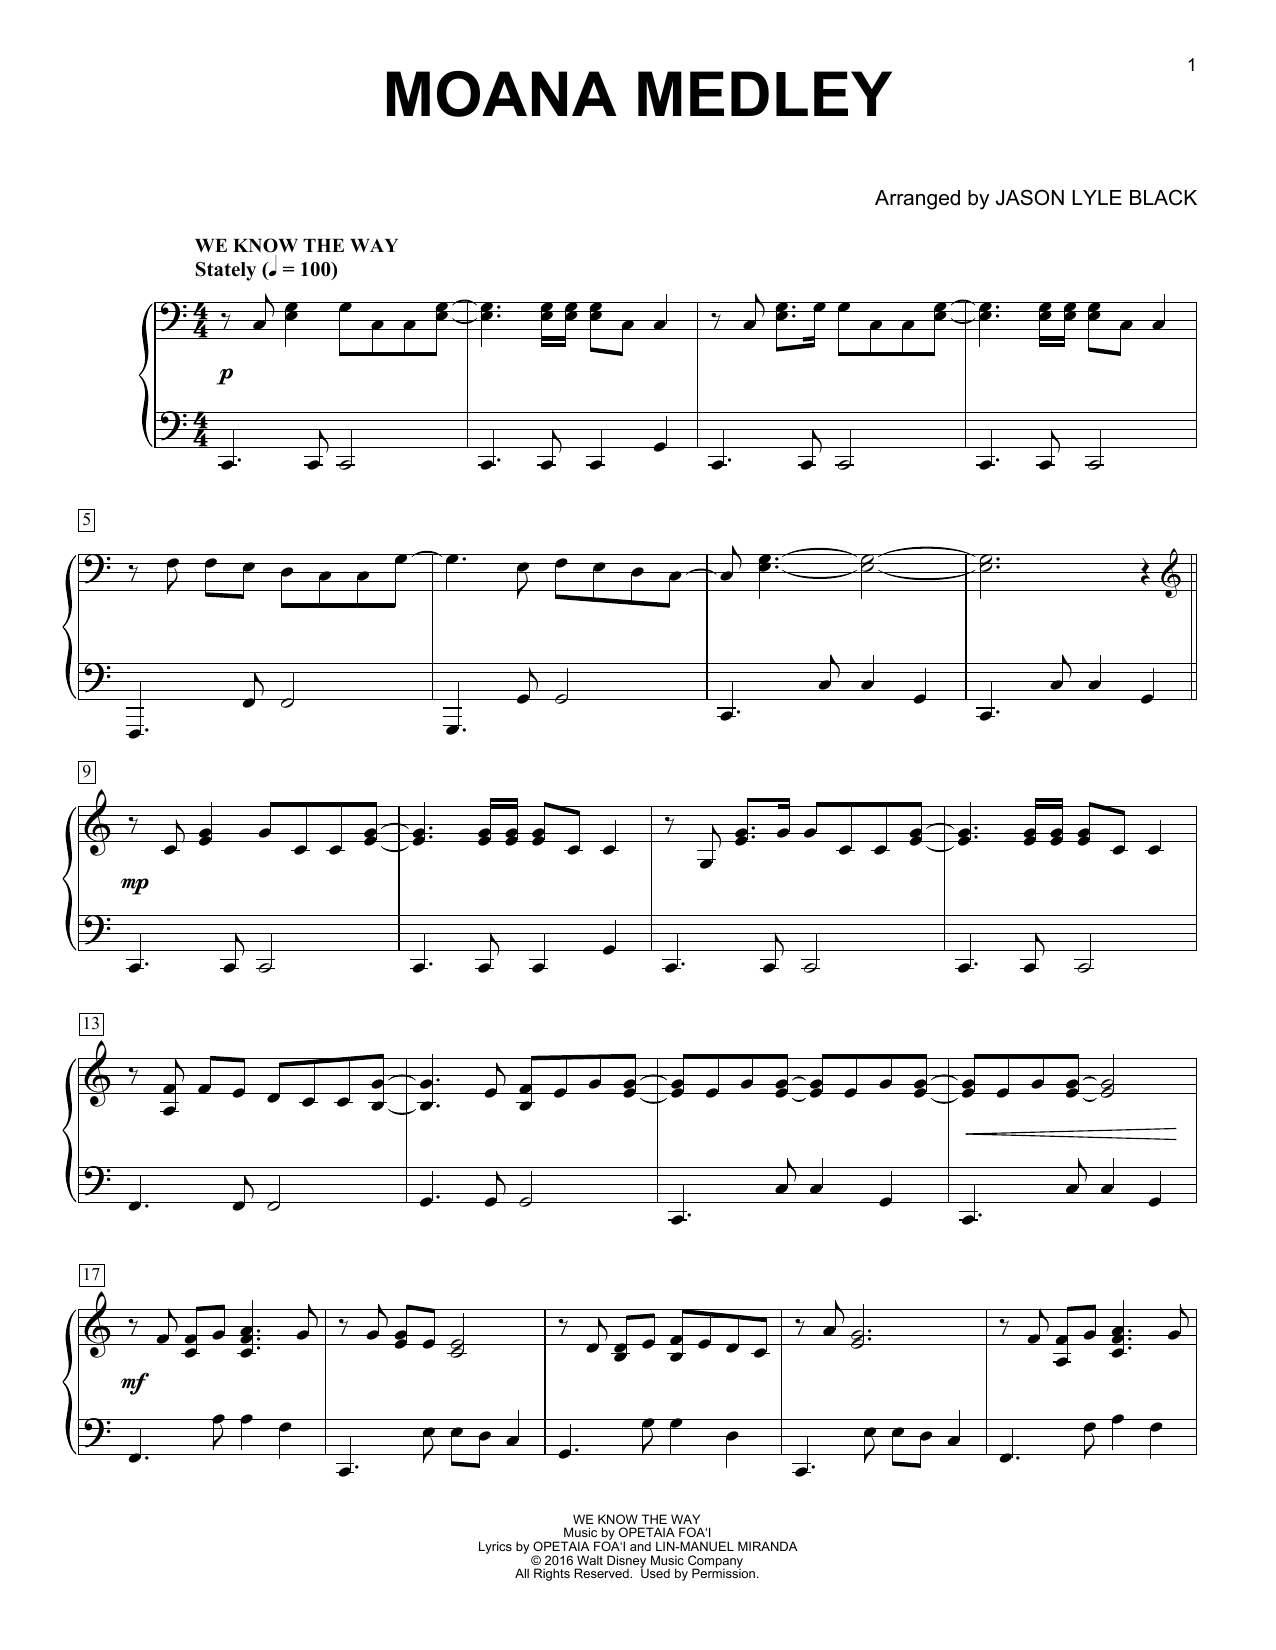 Lin-Manuel Miranda Moana Medley (arr. Jason Lyle Black) Sheet Music Notes & Chords for Piano - Download or Print PDF